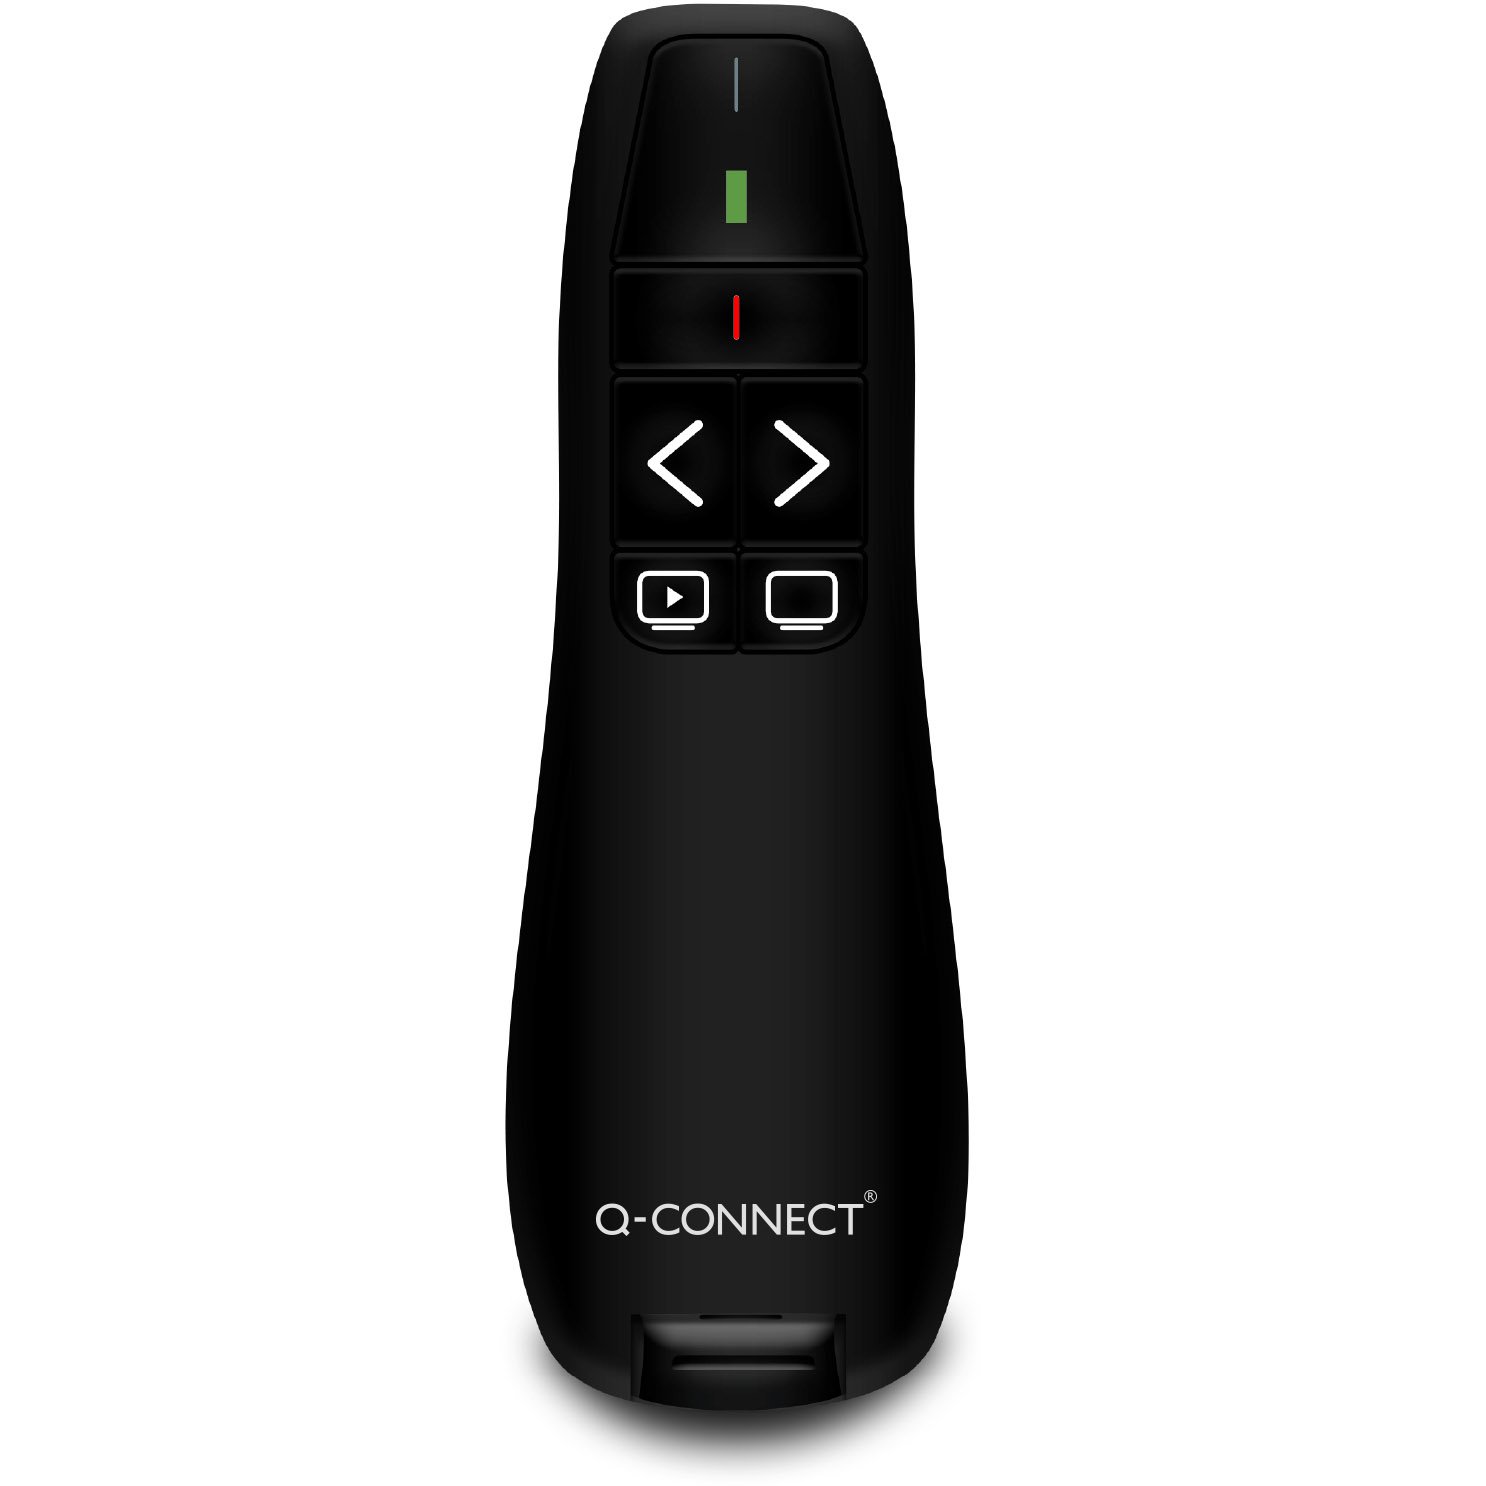 Q-connect presenter